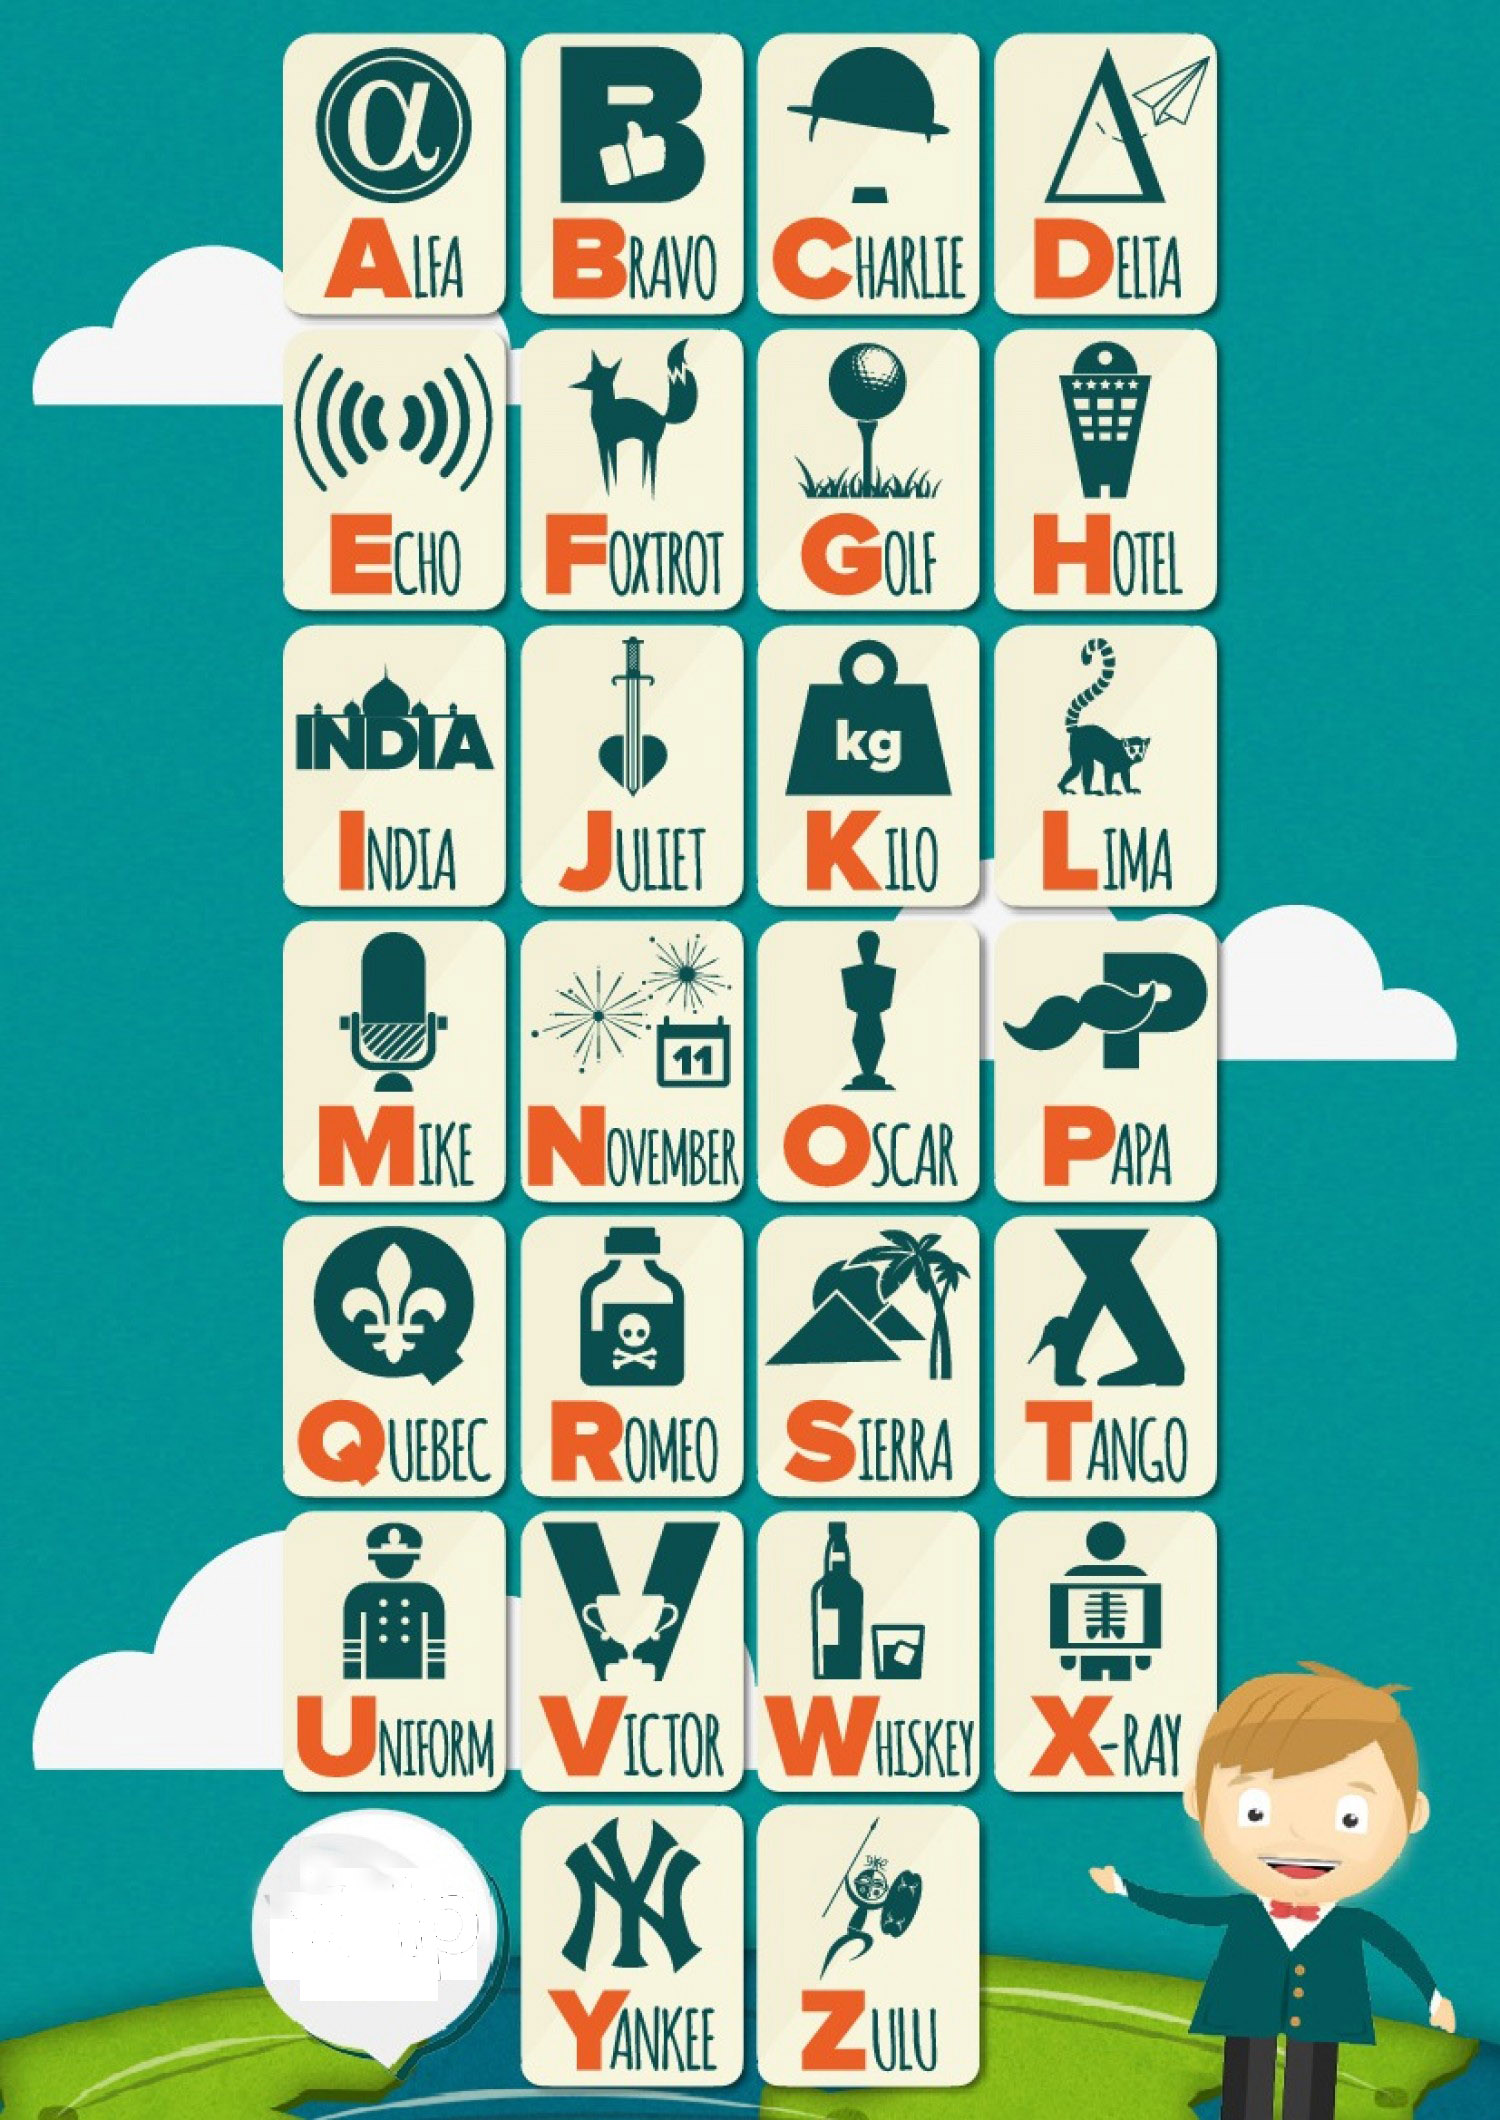 International Phonetic Alphabet Use Beyond Two-Way Radios